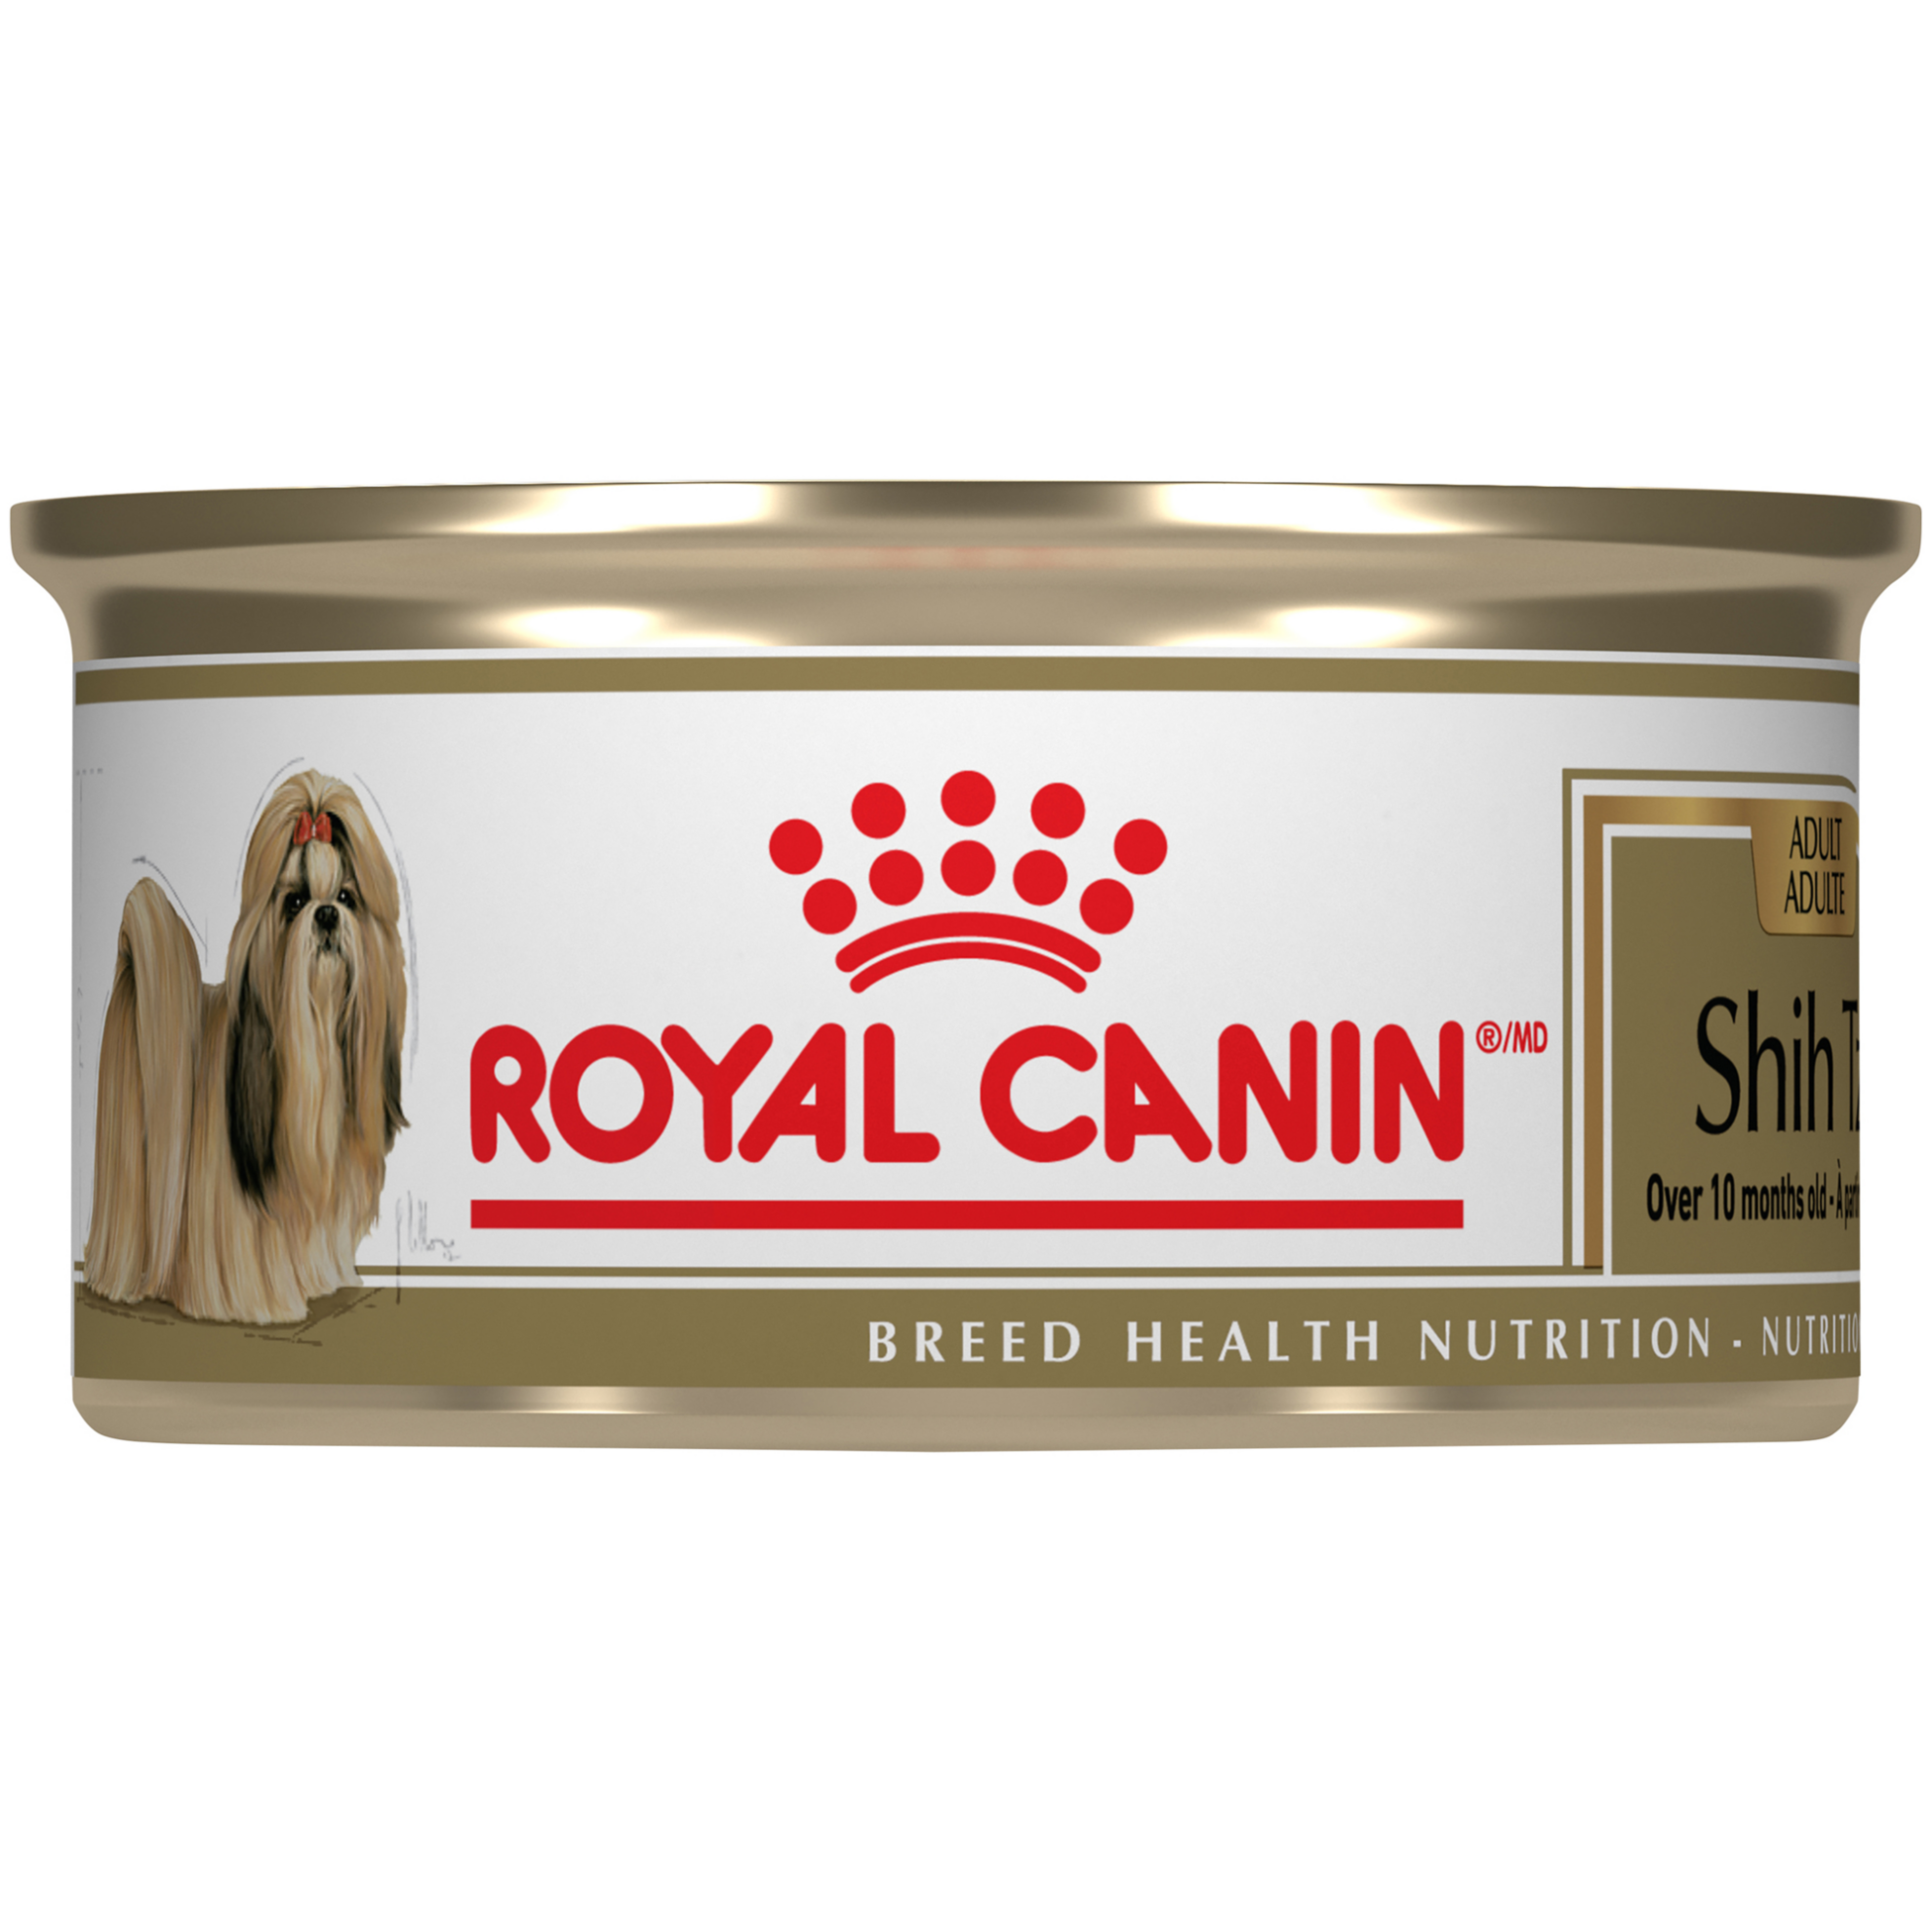 Poodle Adult Loaf in Sauce Canned Dog Food